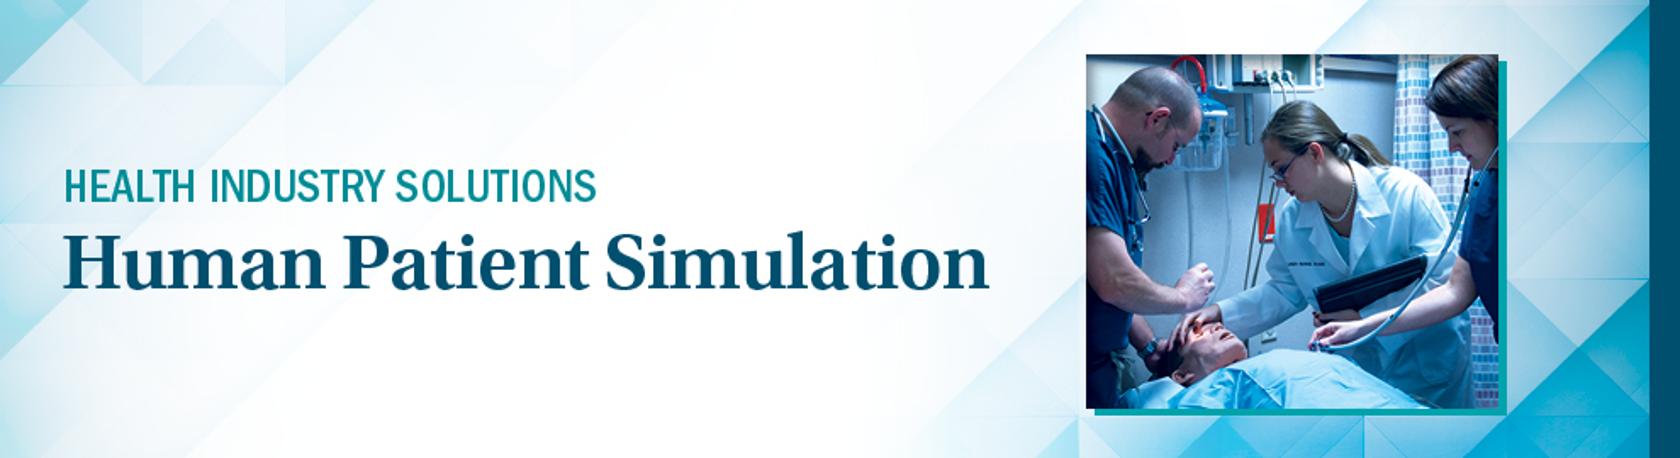 Human Patient Simulation